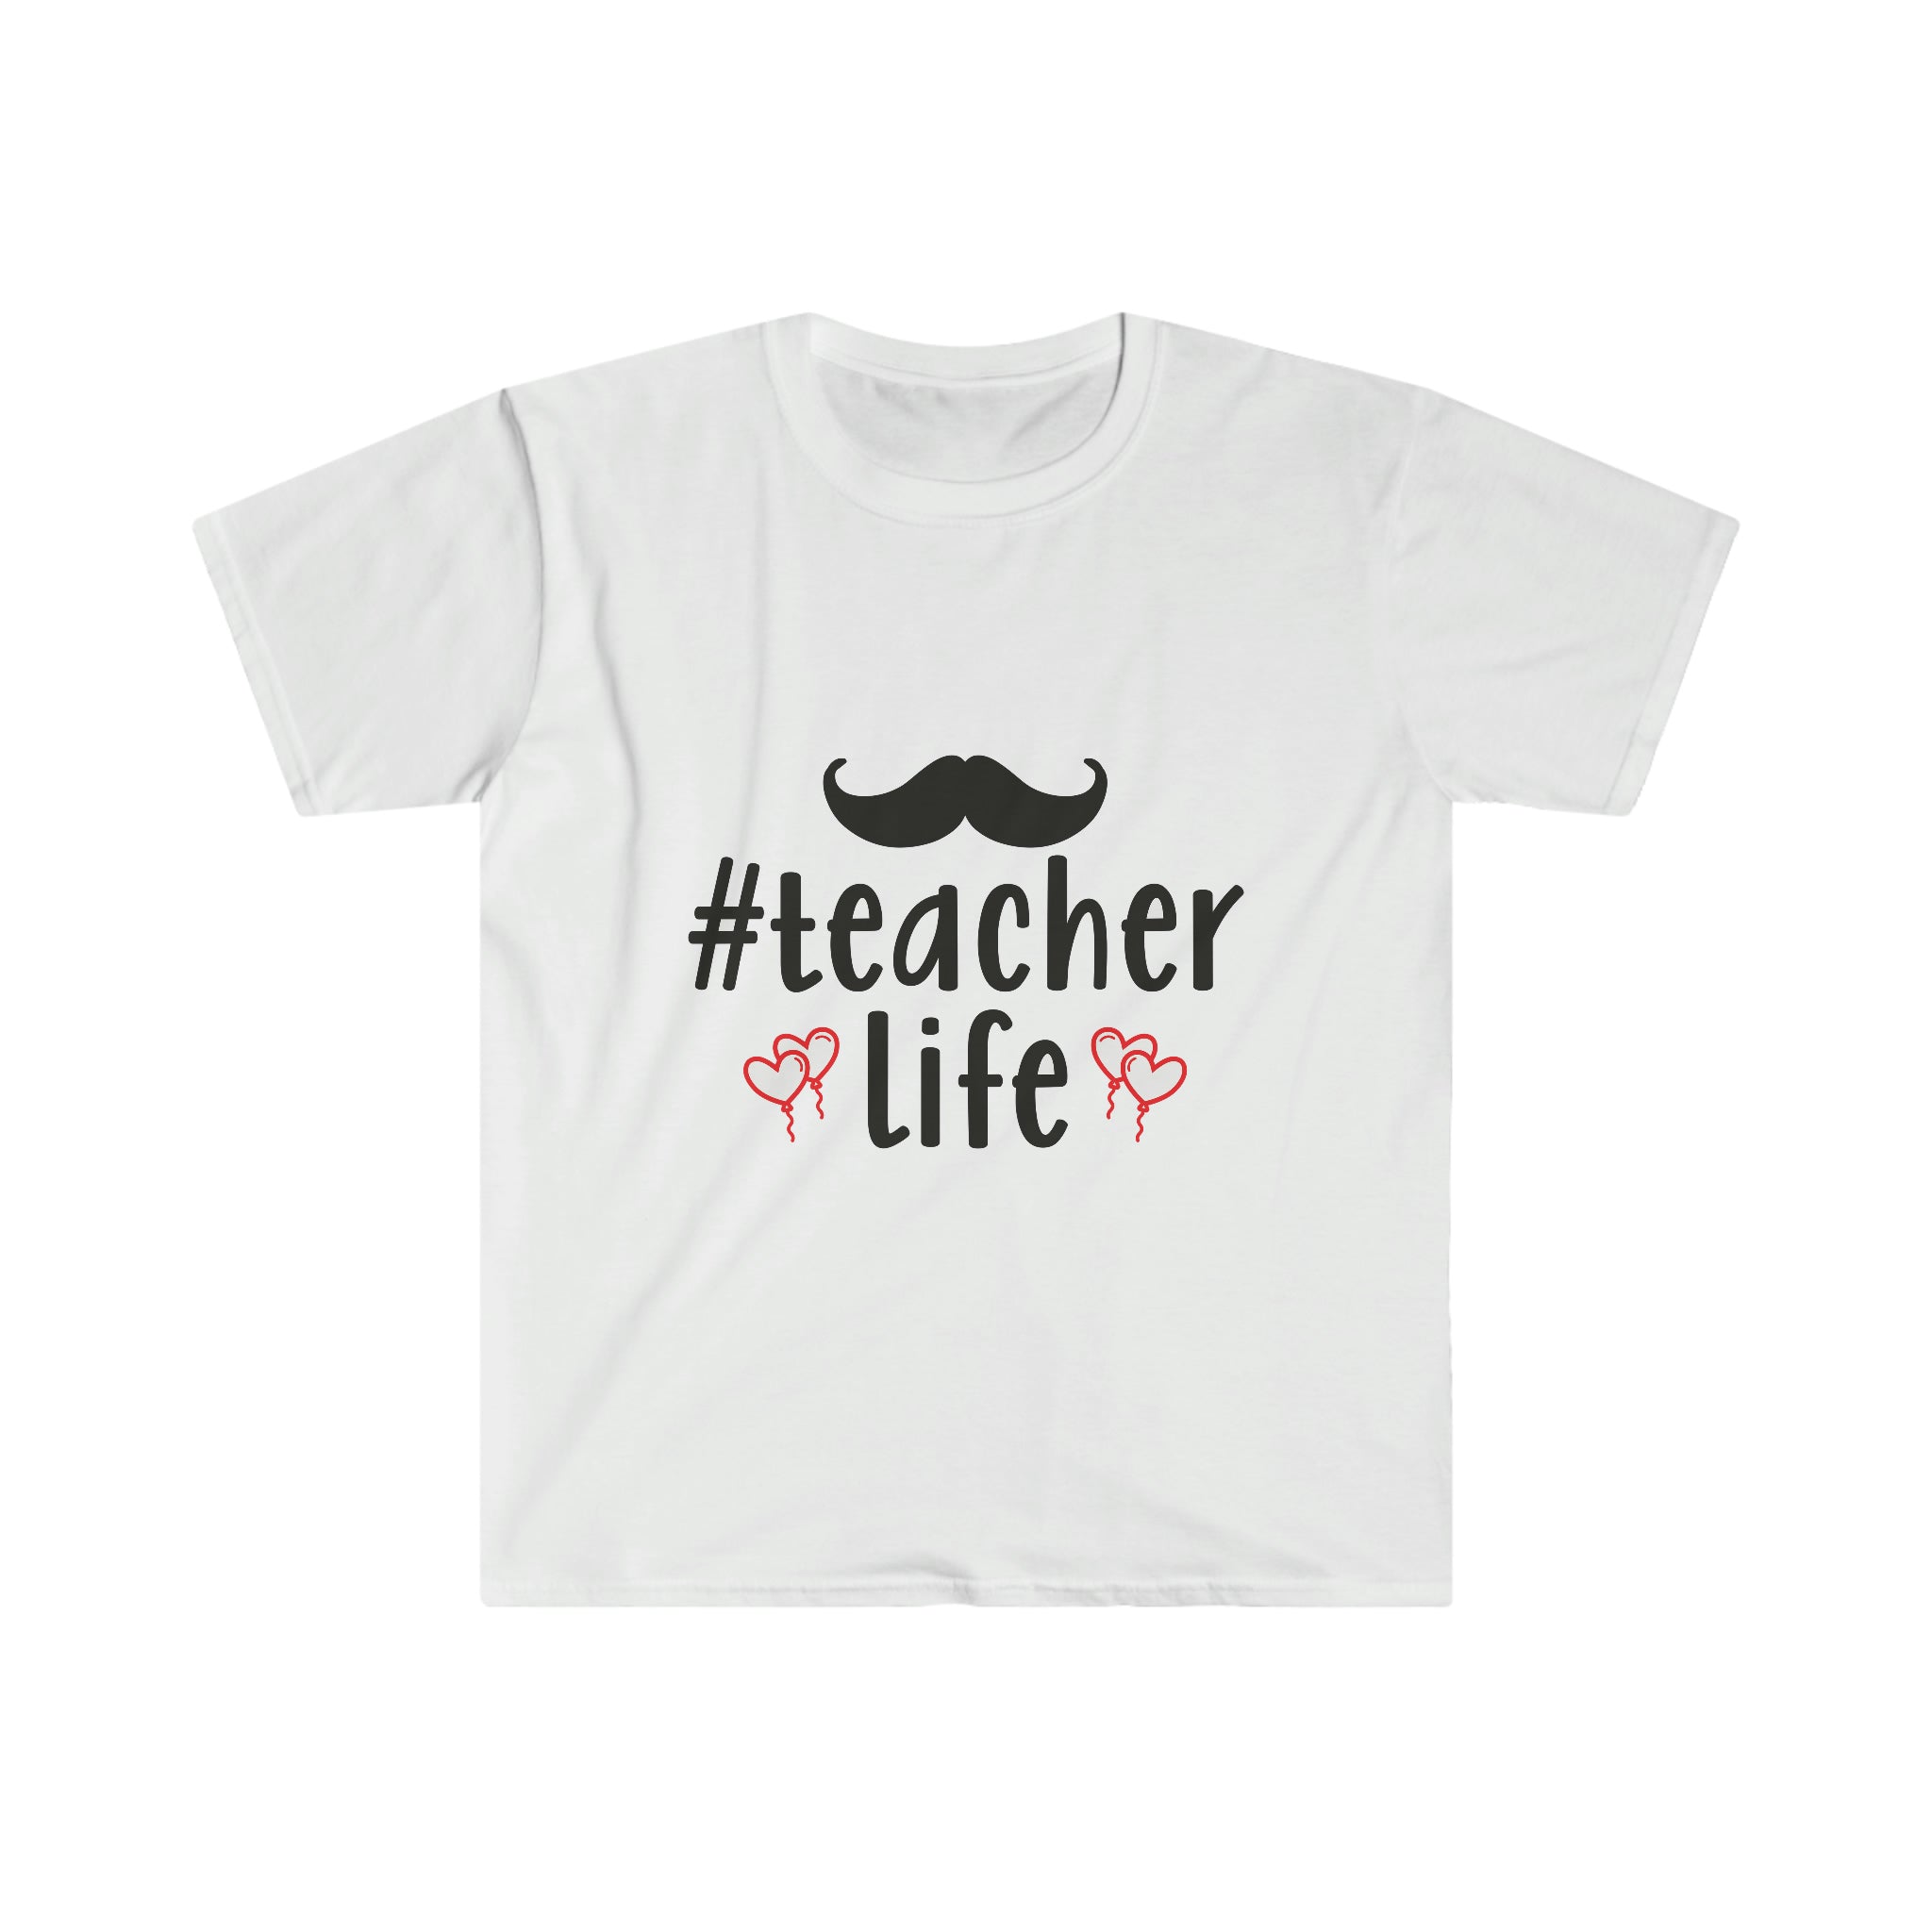 A white Teacher's Life - Men T-Shirt that showcases teacher swagger with a mustache.